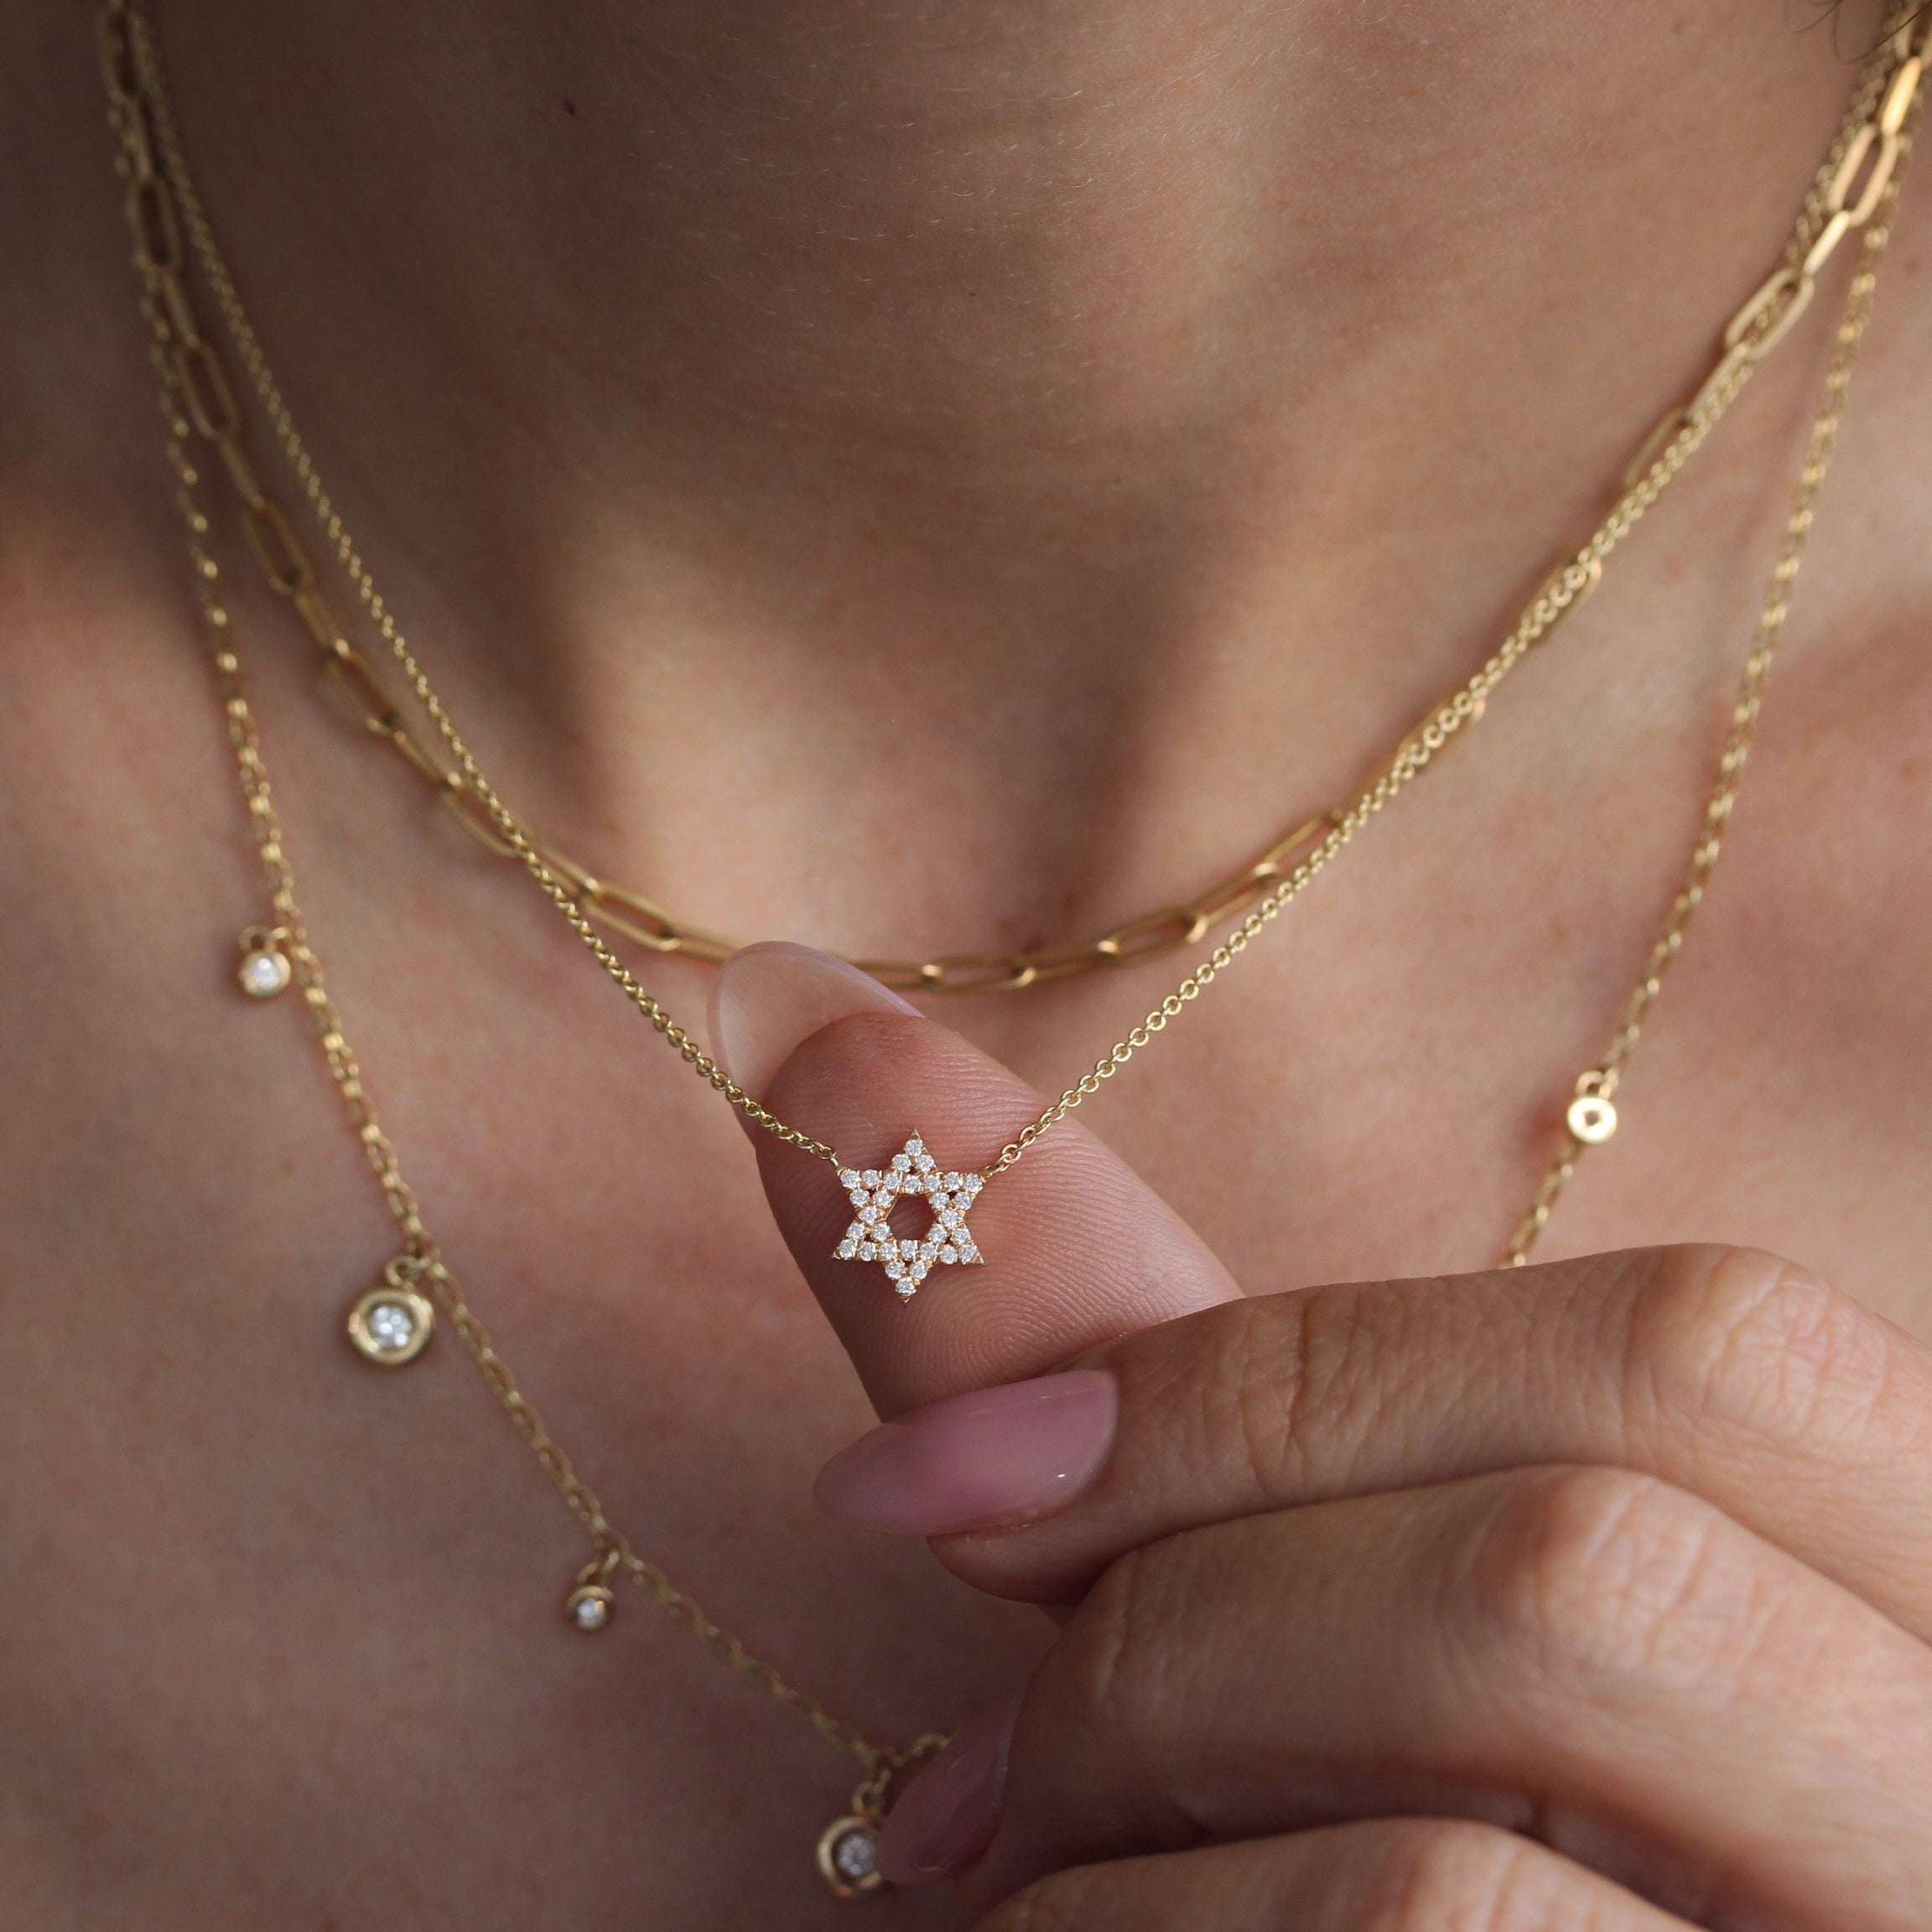 10mm Small Star of David Diamond Pendant Gold Necklace ♥